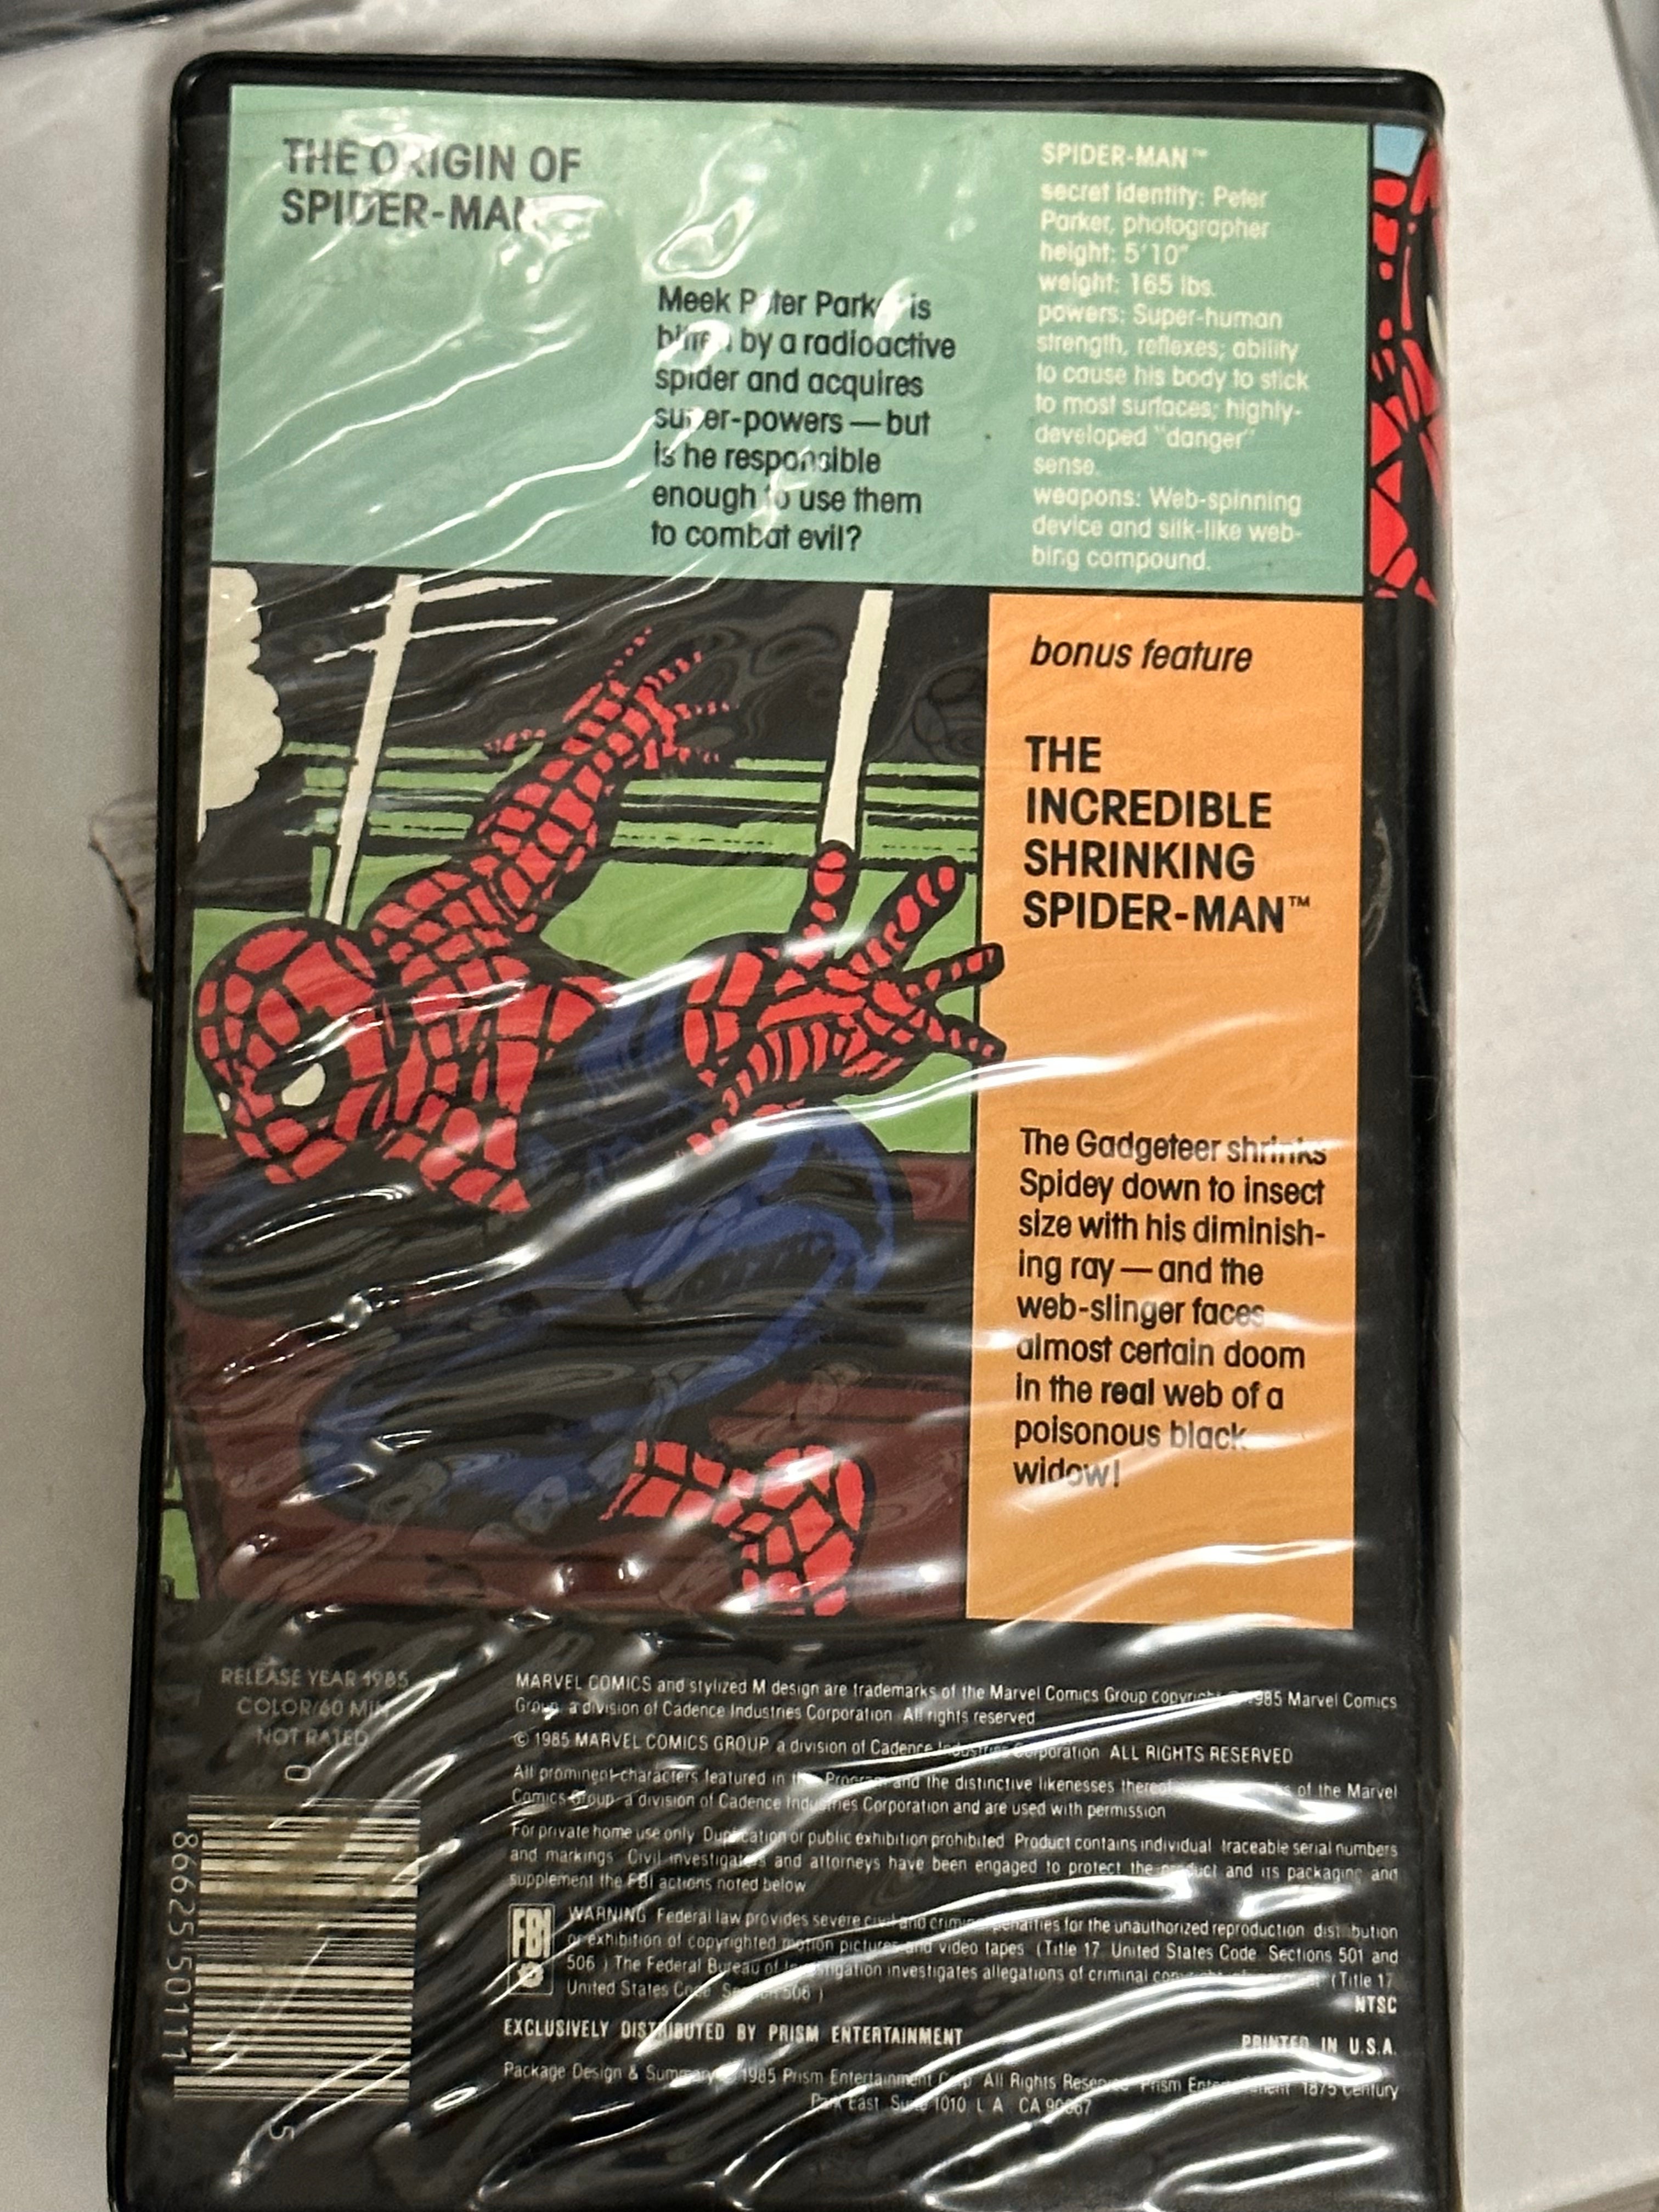 VHS spider-man original Marvel comics 1985